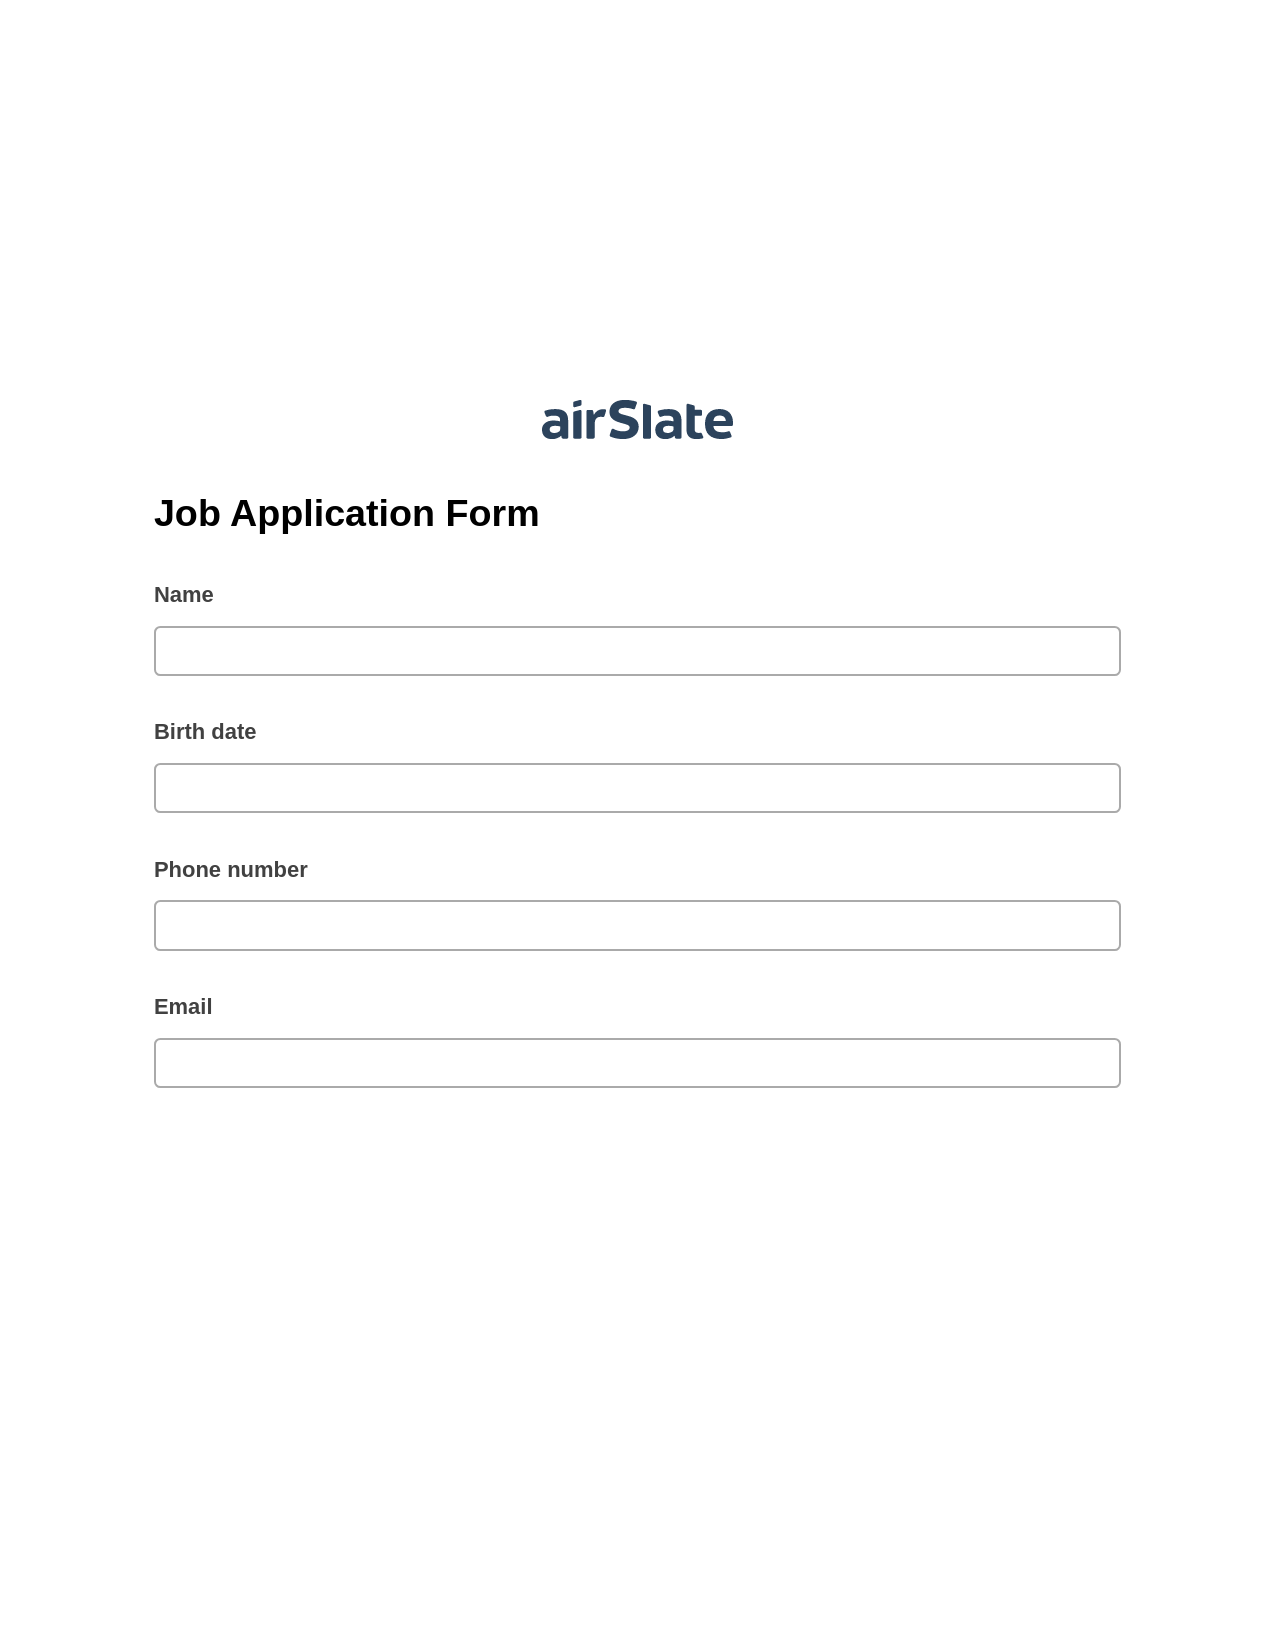 Job Application Form Pre-fill Dropdowns from Smartsheet Bot, Mailchimp send Campaign bot, Export to Smartsheet